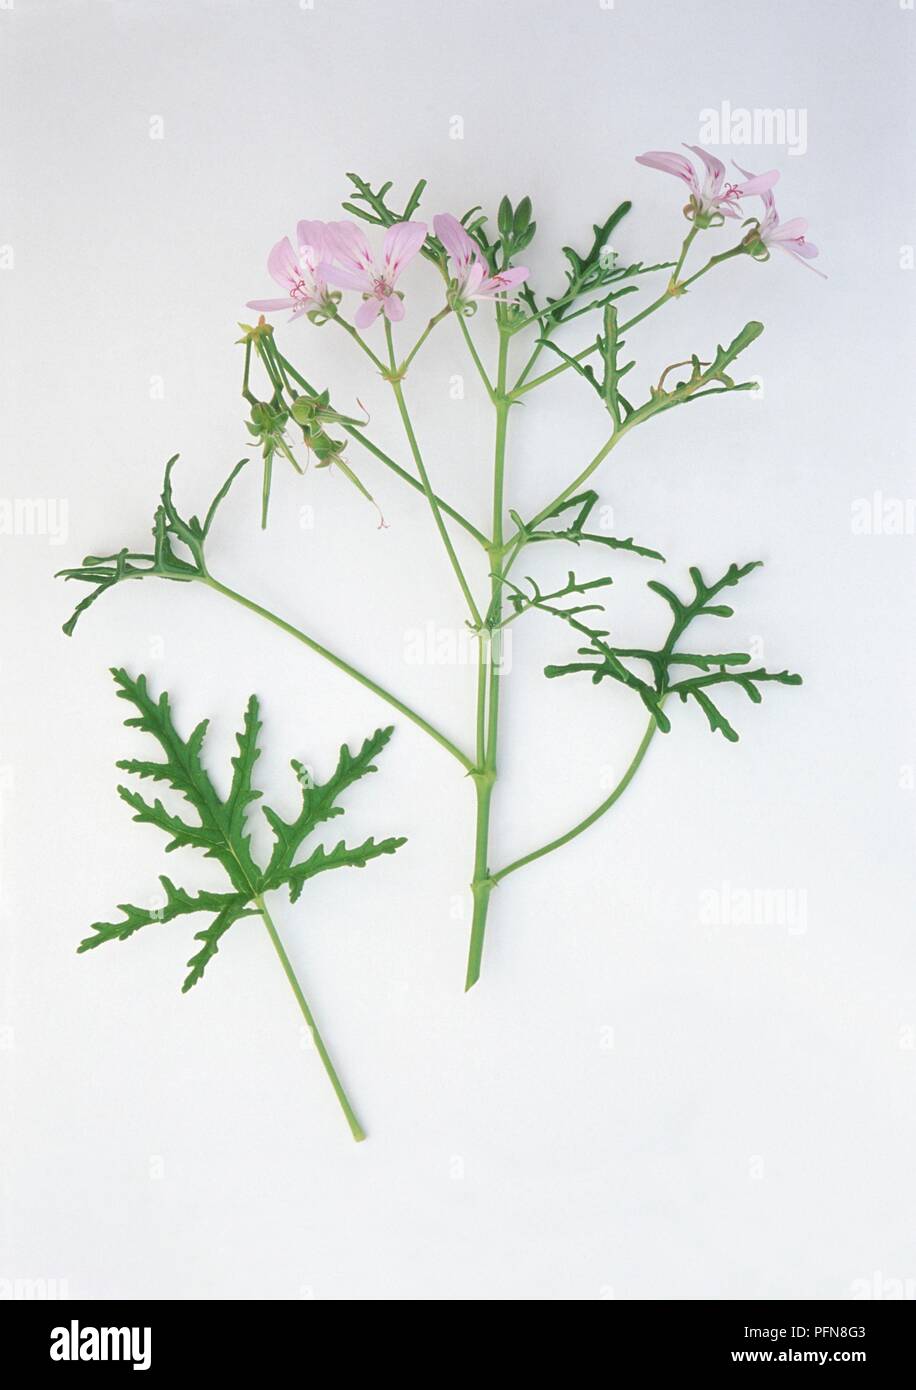 Pelargonium radens (Rasp-leaved pelargonium), stems with leaves and pale pink flowers Stock Photo